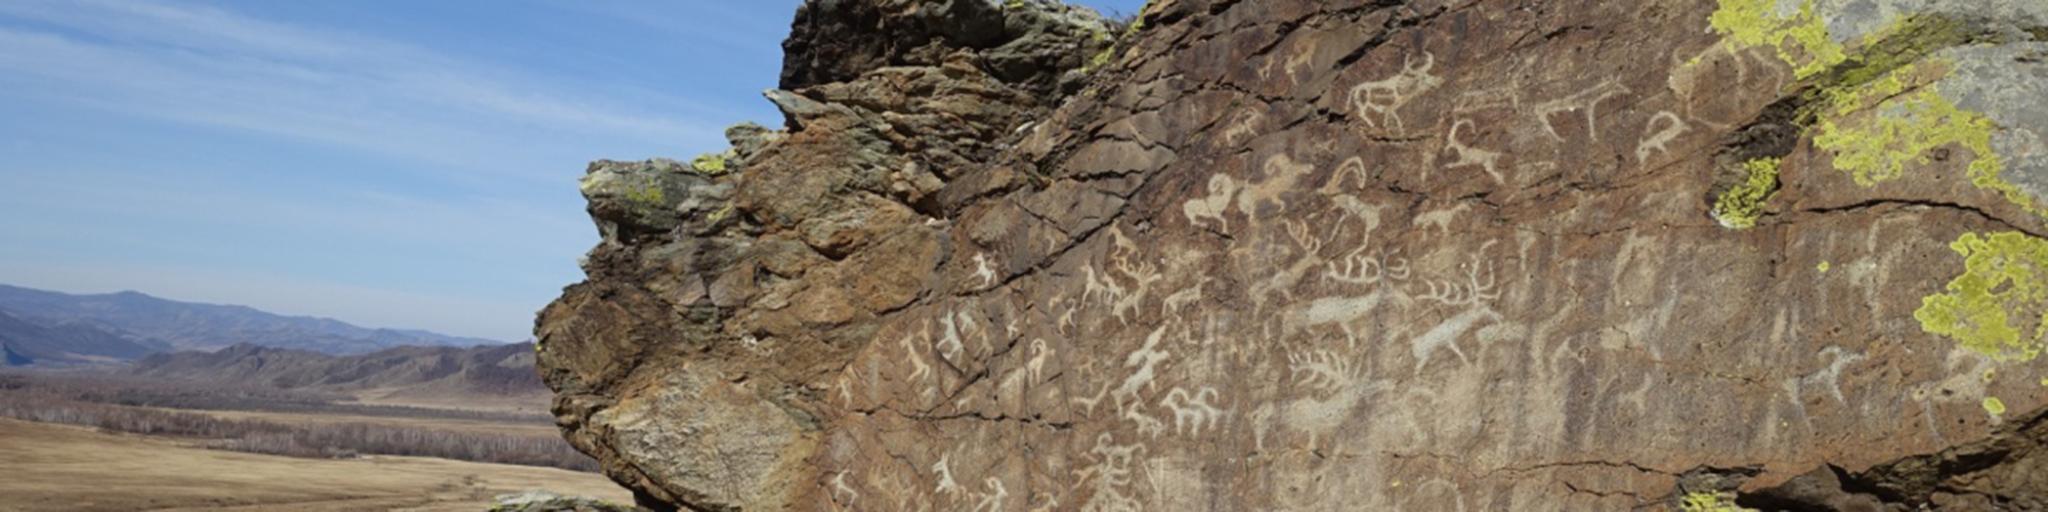 Mongolian rock art